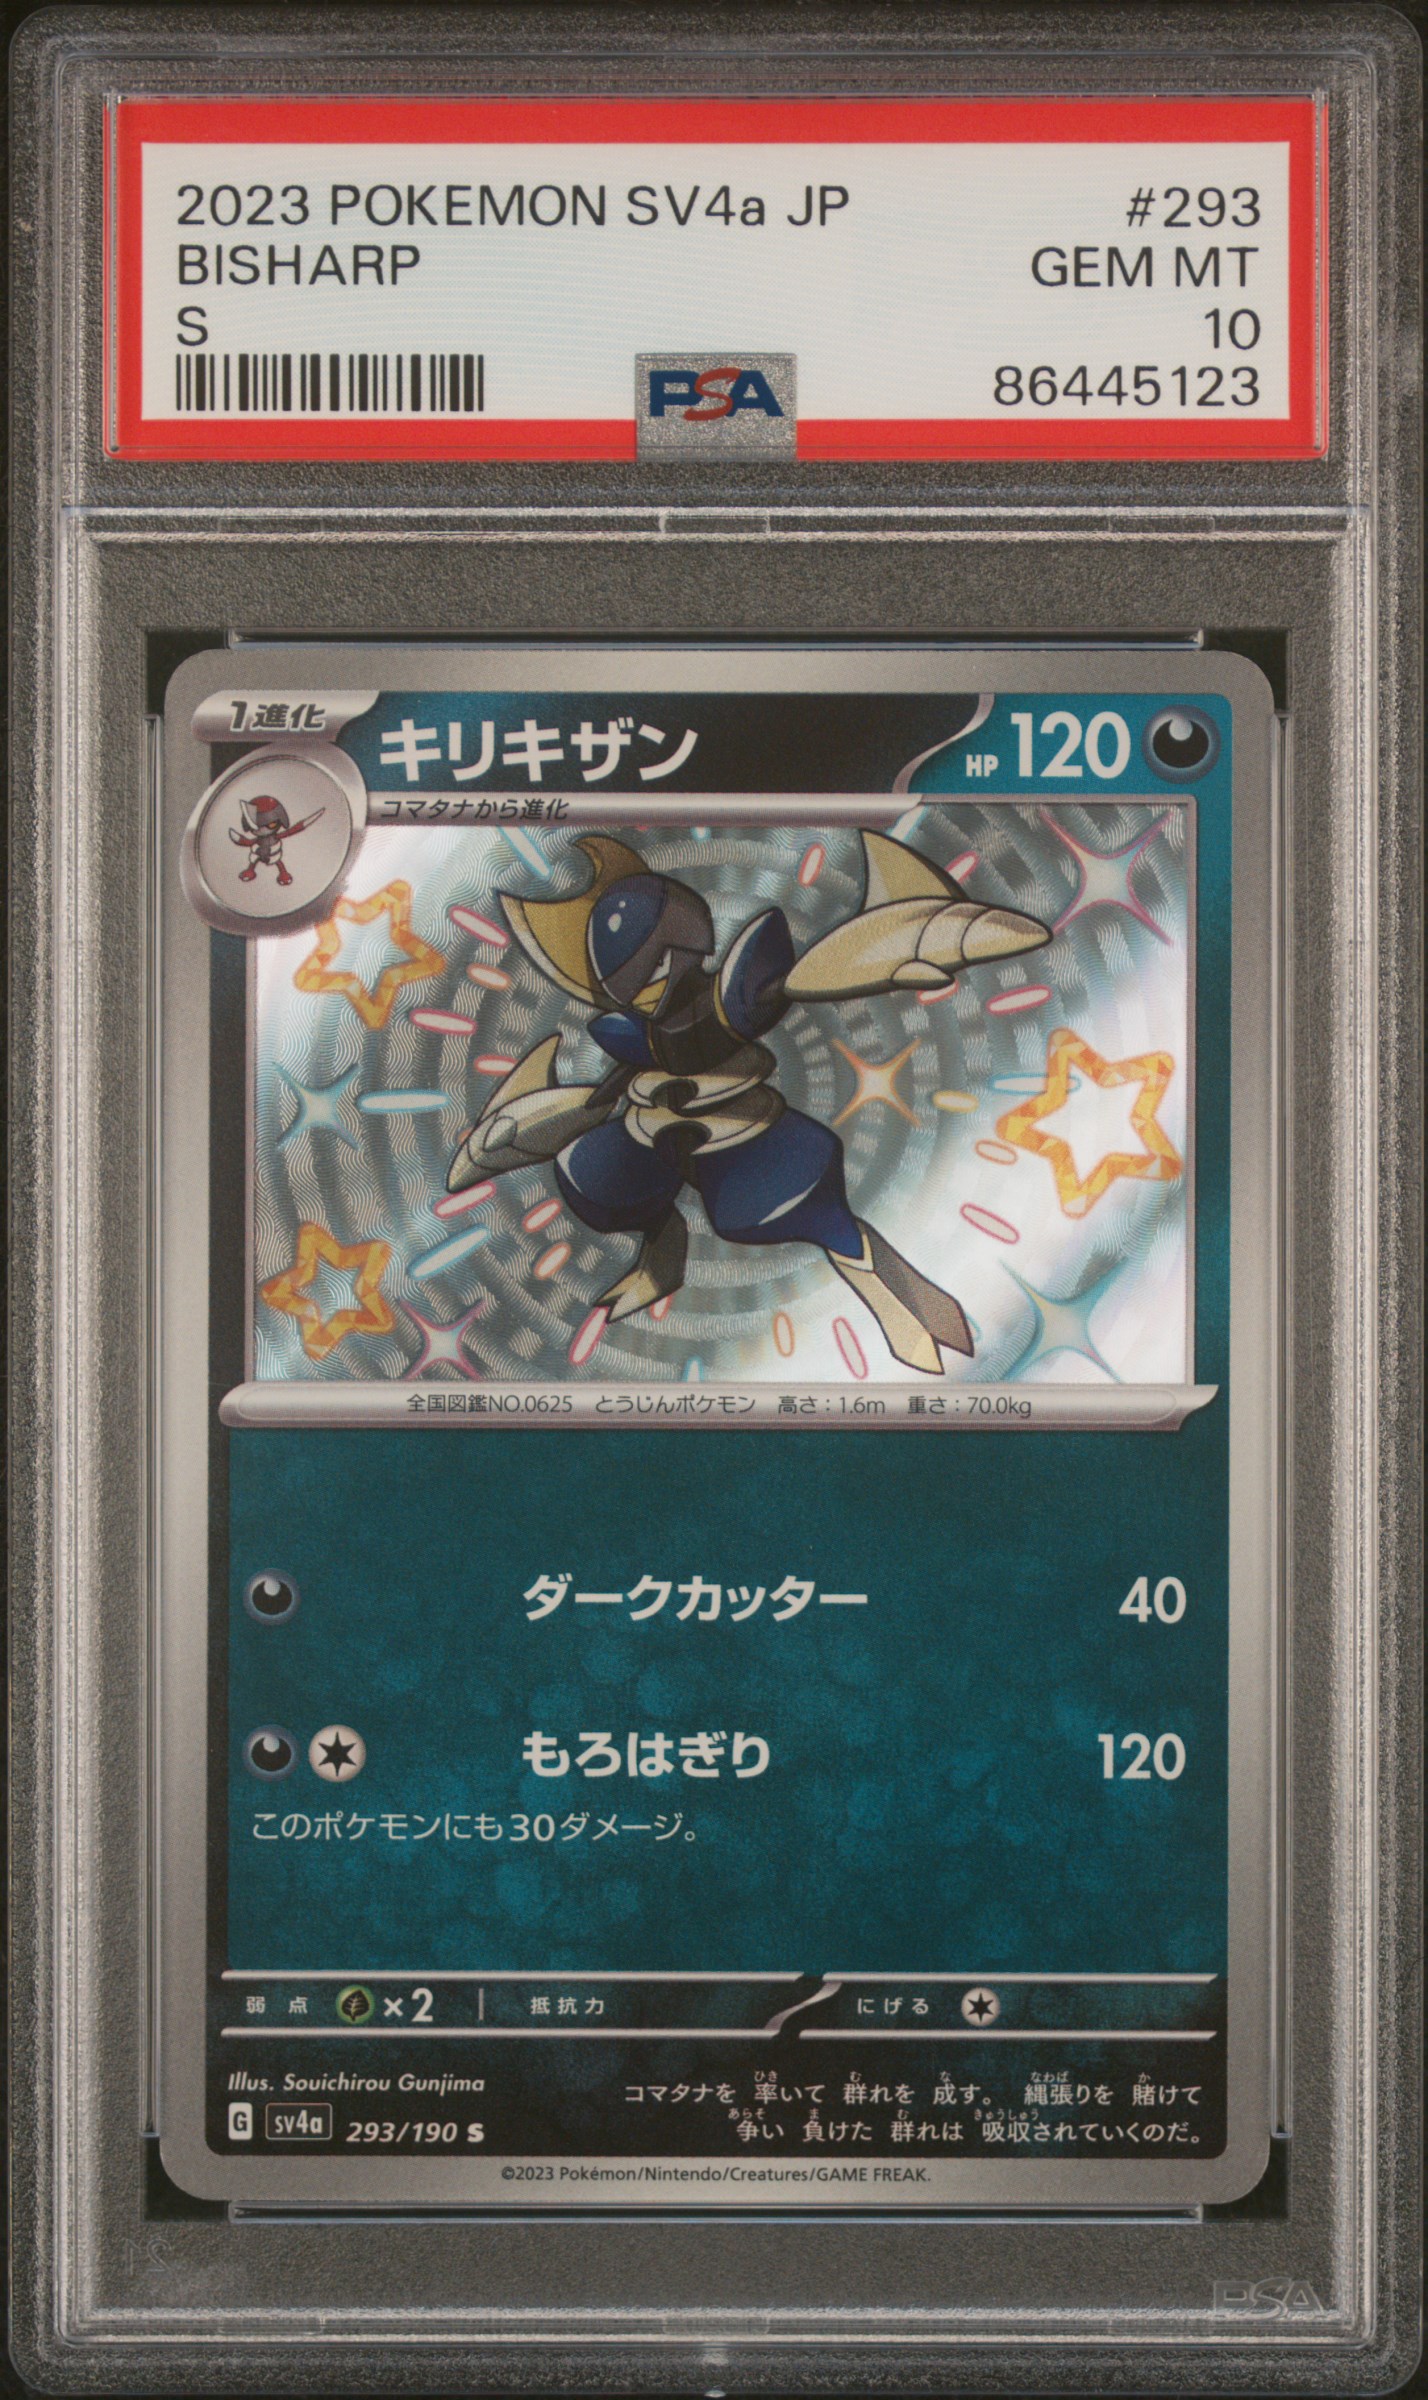 2023 Pokemon Japanese Sv4A-Shiny Treasure Ex S 293 Bisharp – PSA GEM MT 10